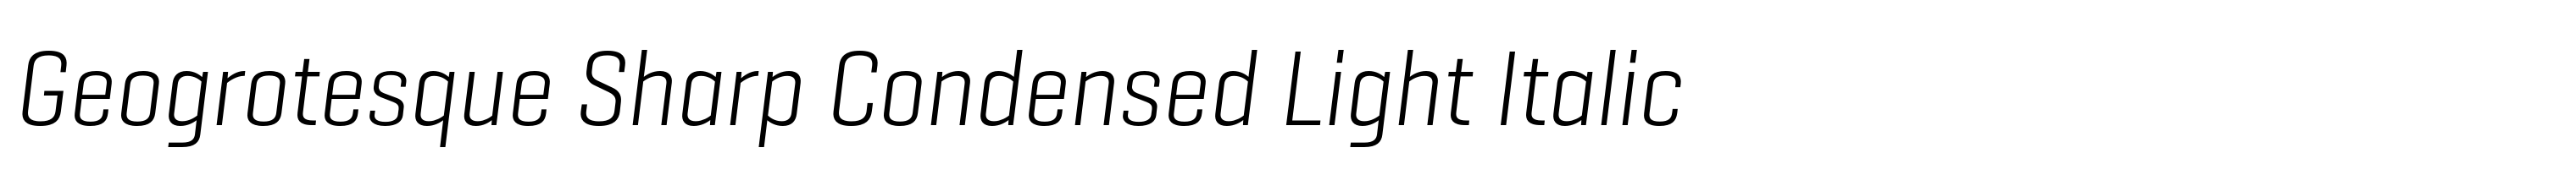 Geogrotesque Sharp Condensed Light Italic